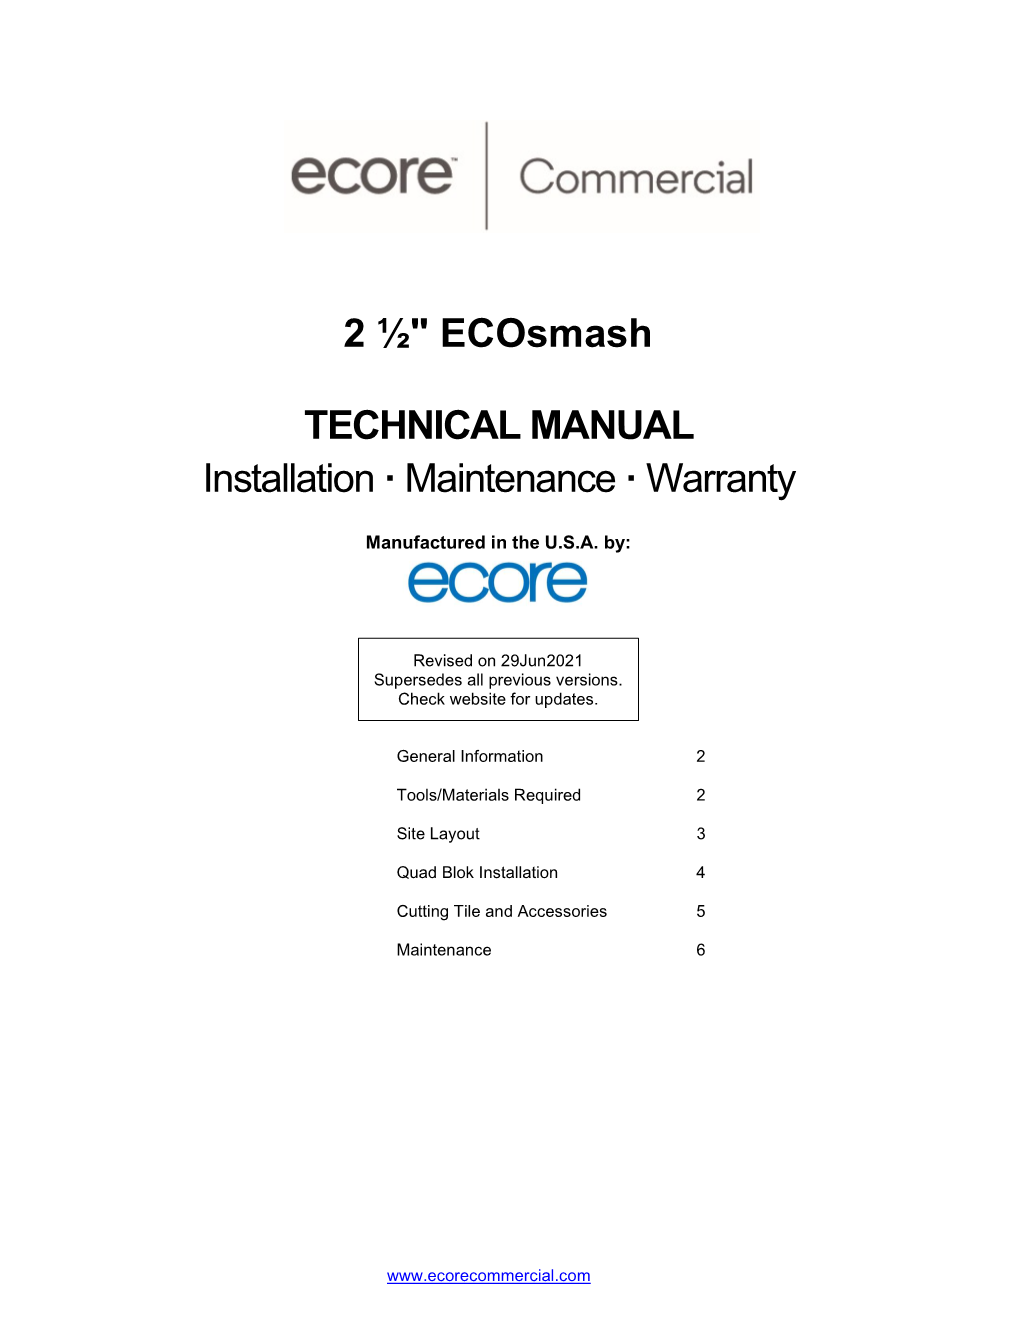 Ecosmash Tile Tech Manual